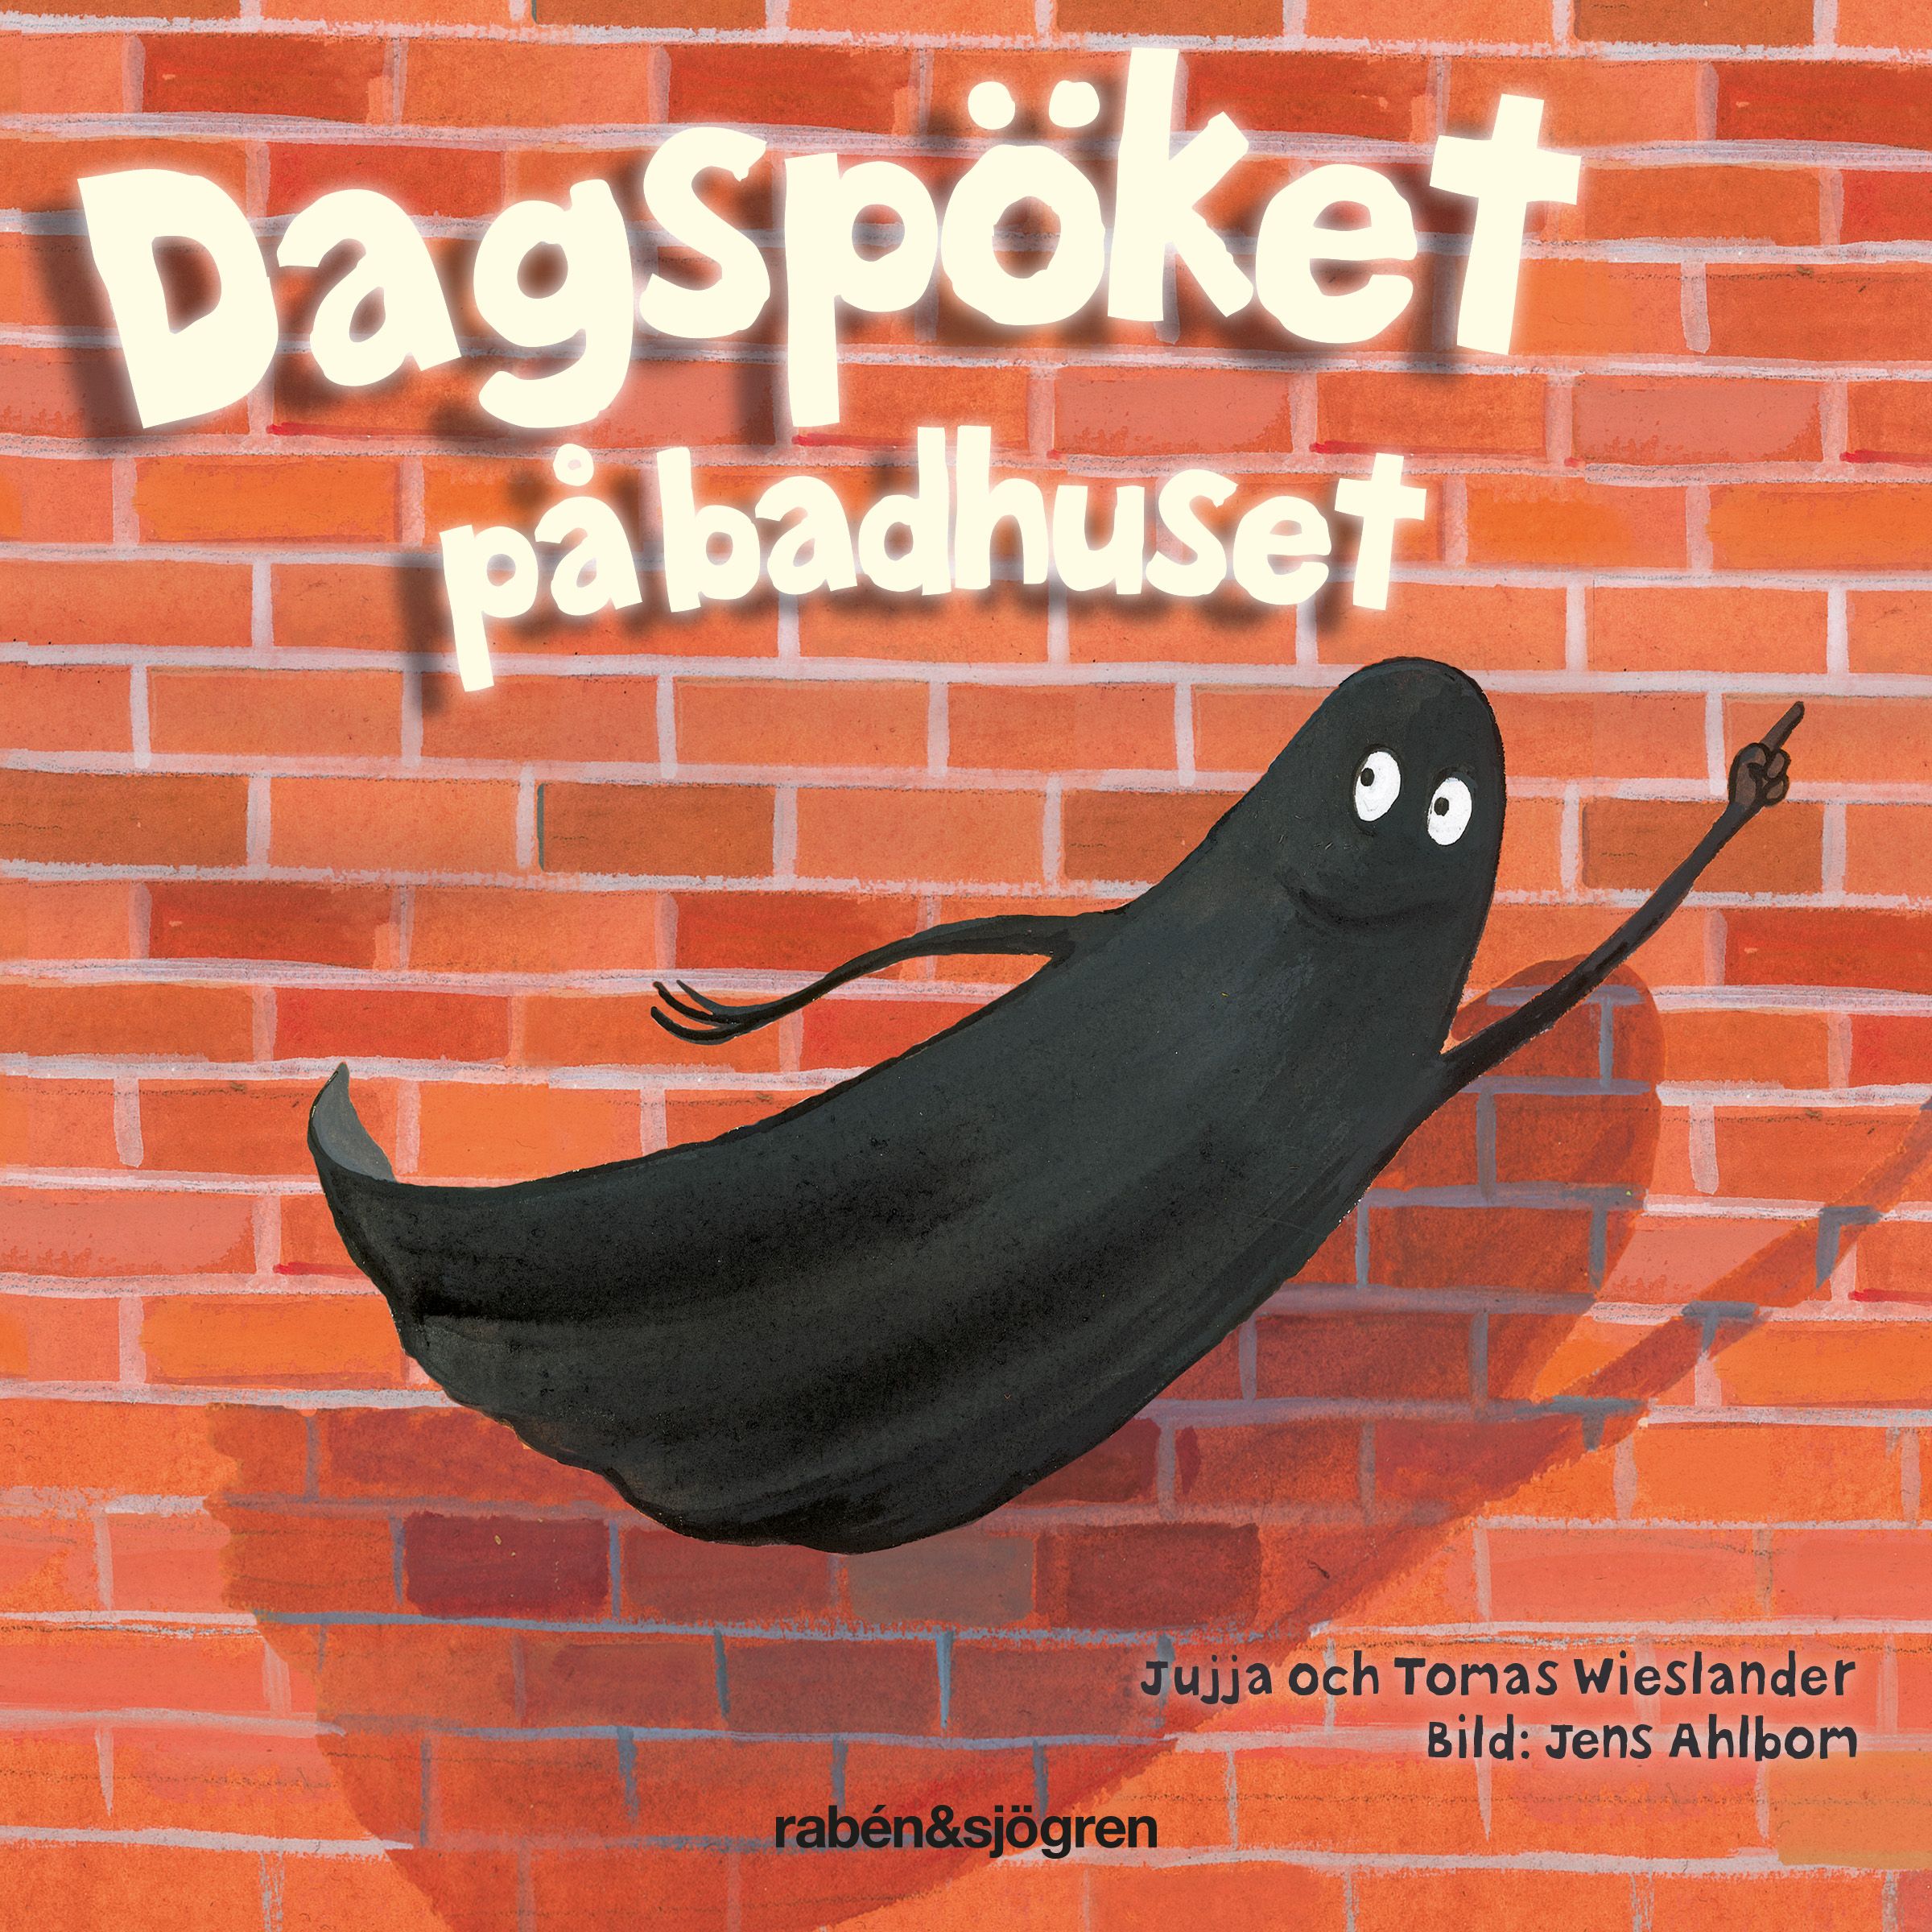 Dagspöket på badhuset, audiobook by Jujja Wieslander